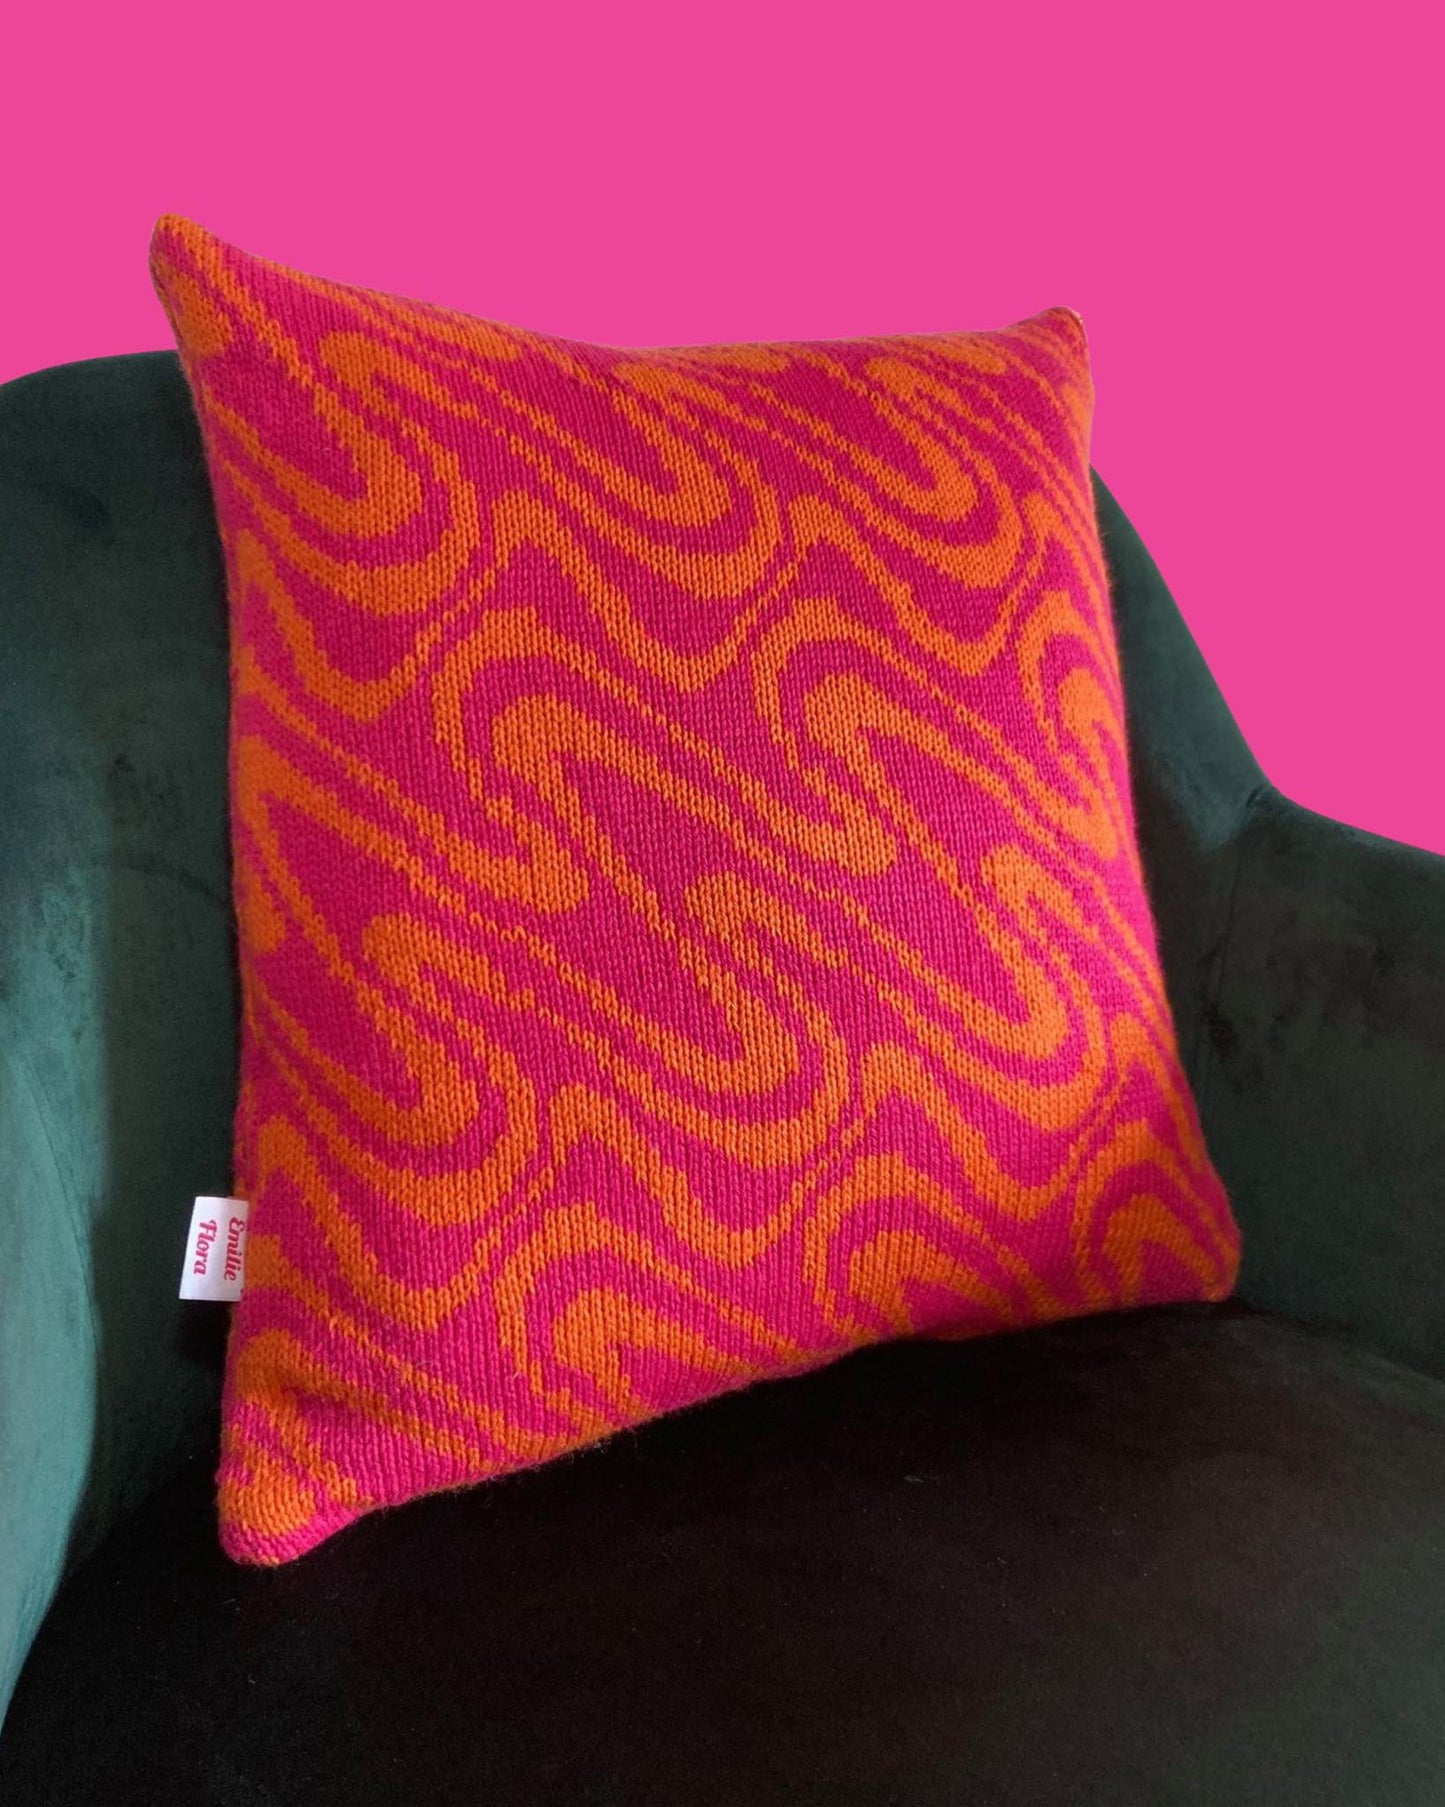 Cushion - Swirly, Hot Pink and Orange - READY TO SHIP